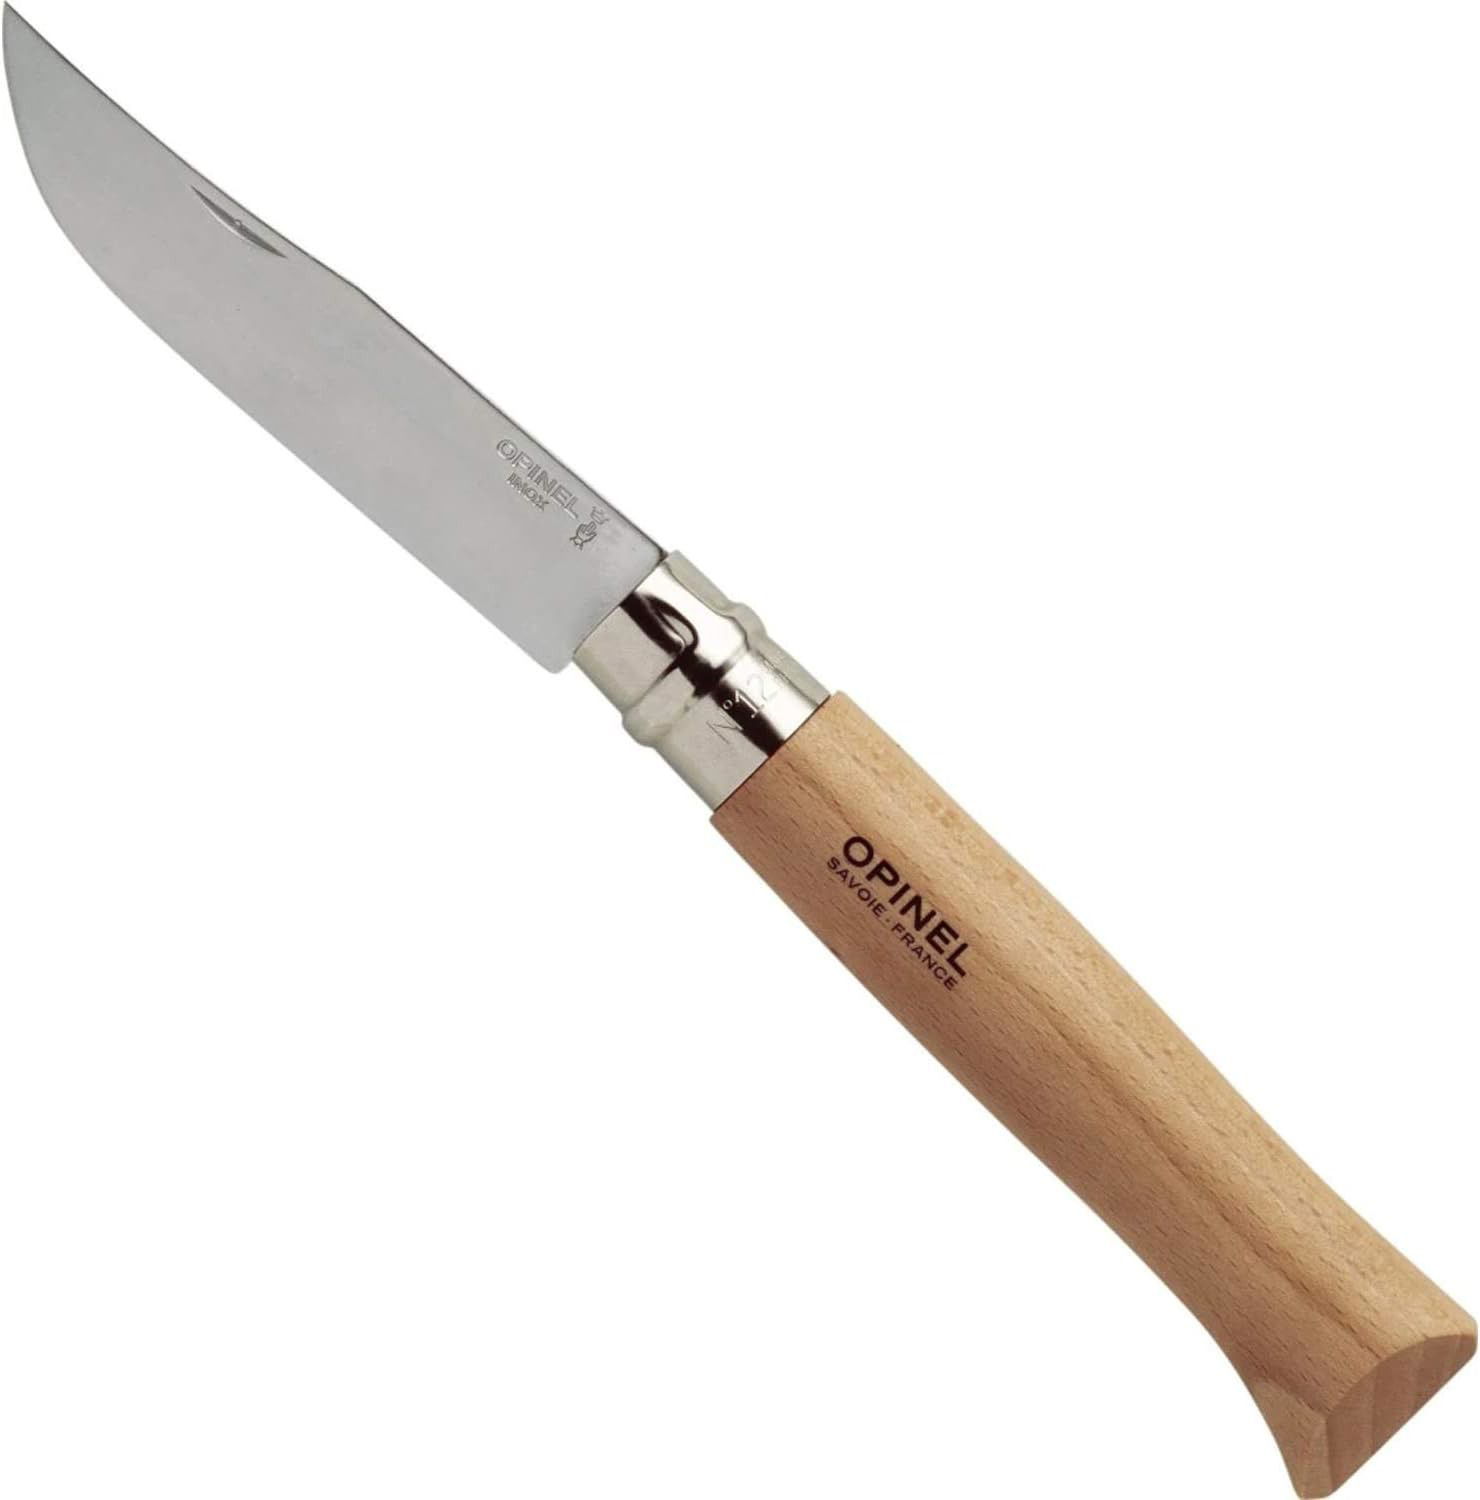 Opinel No. 12 Stainless Steel Pocket Knife, Beechwood Handle